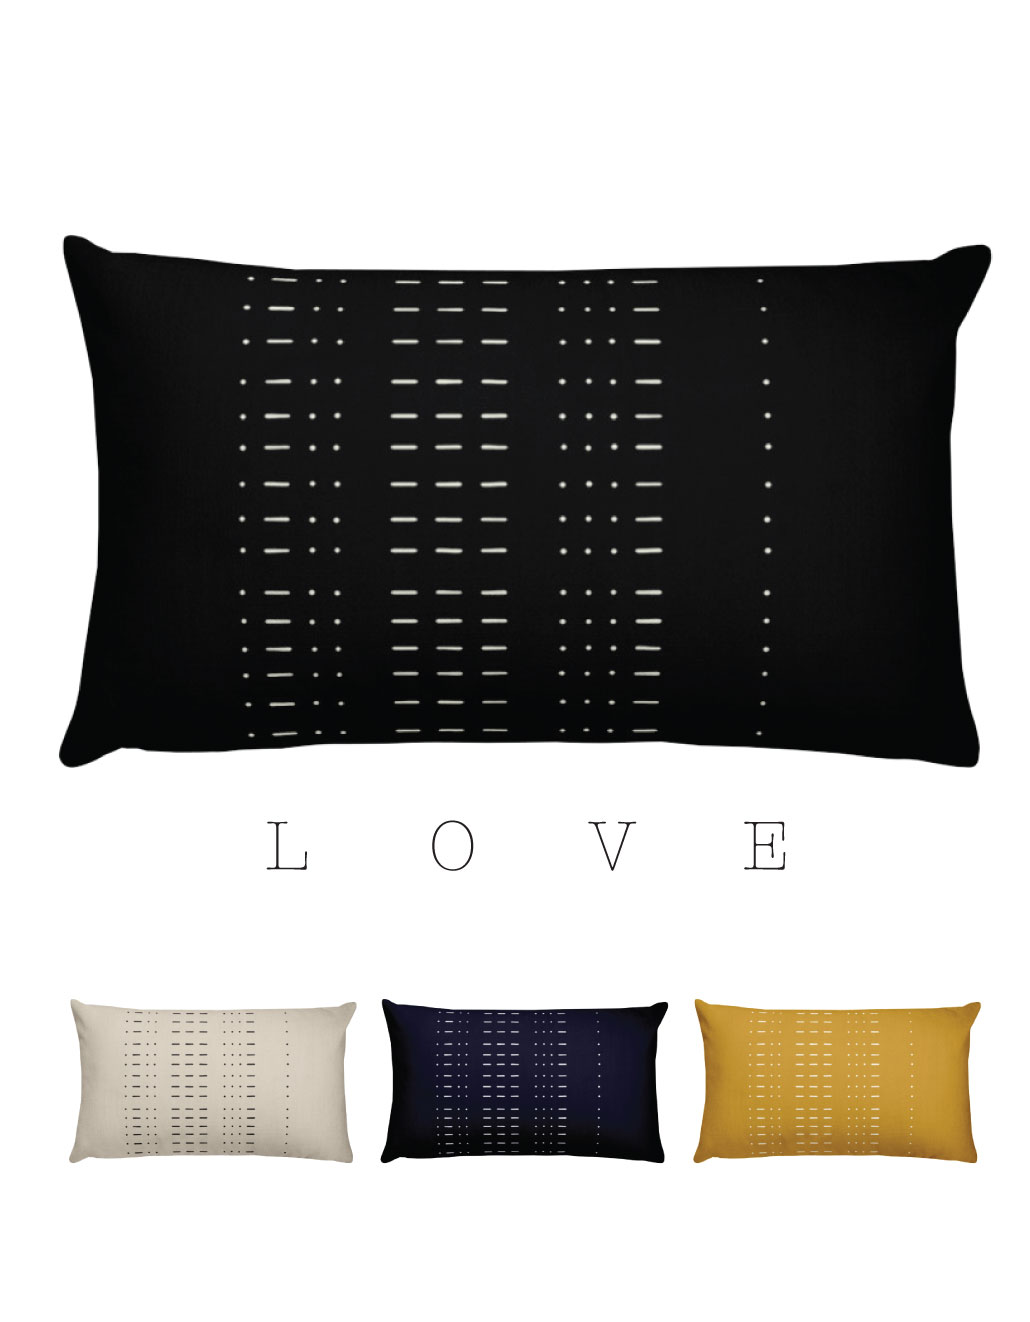 Coded Love – off-white morse code “LOVE” lumbar pillow